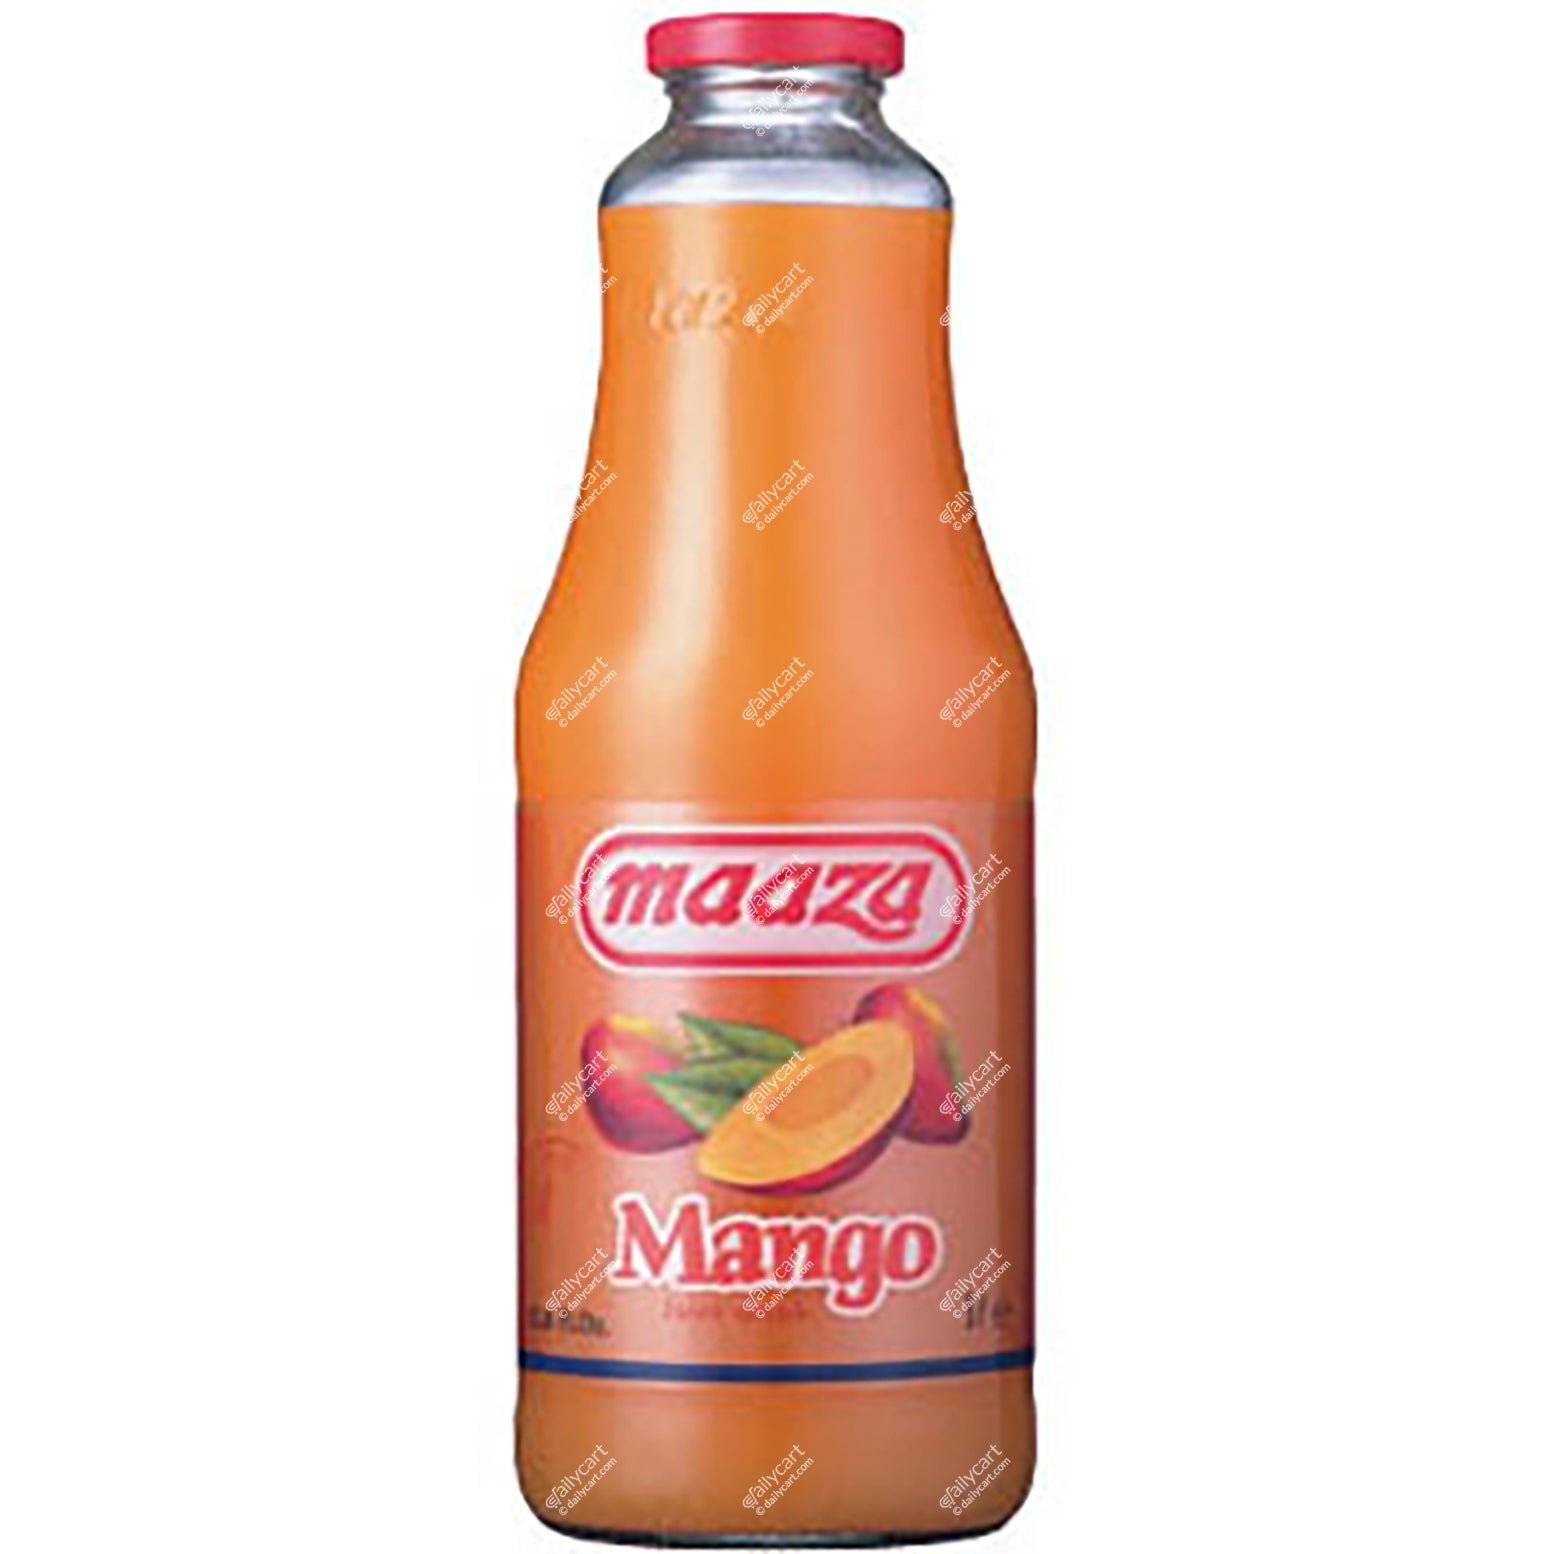 Maaza Mango Juice, 1 litre, Glass Bottle